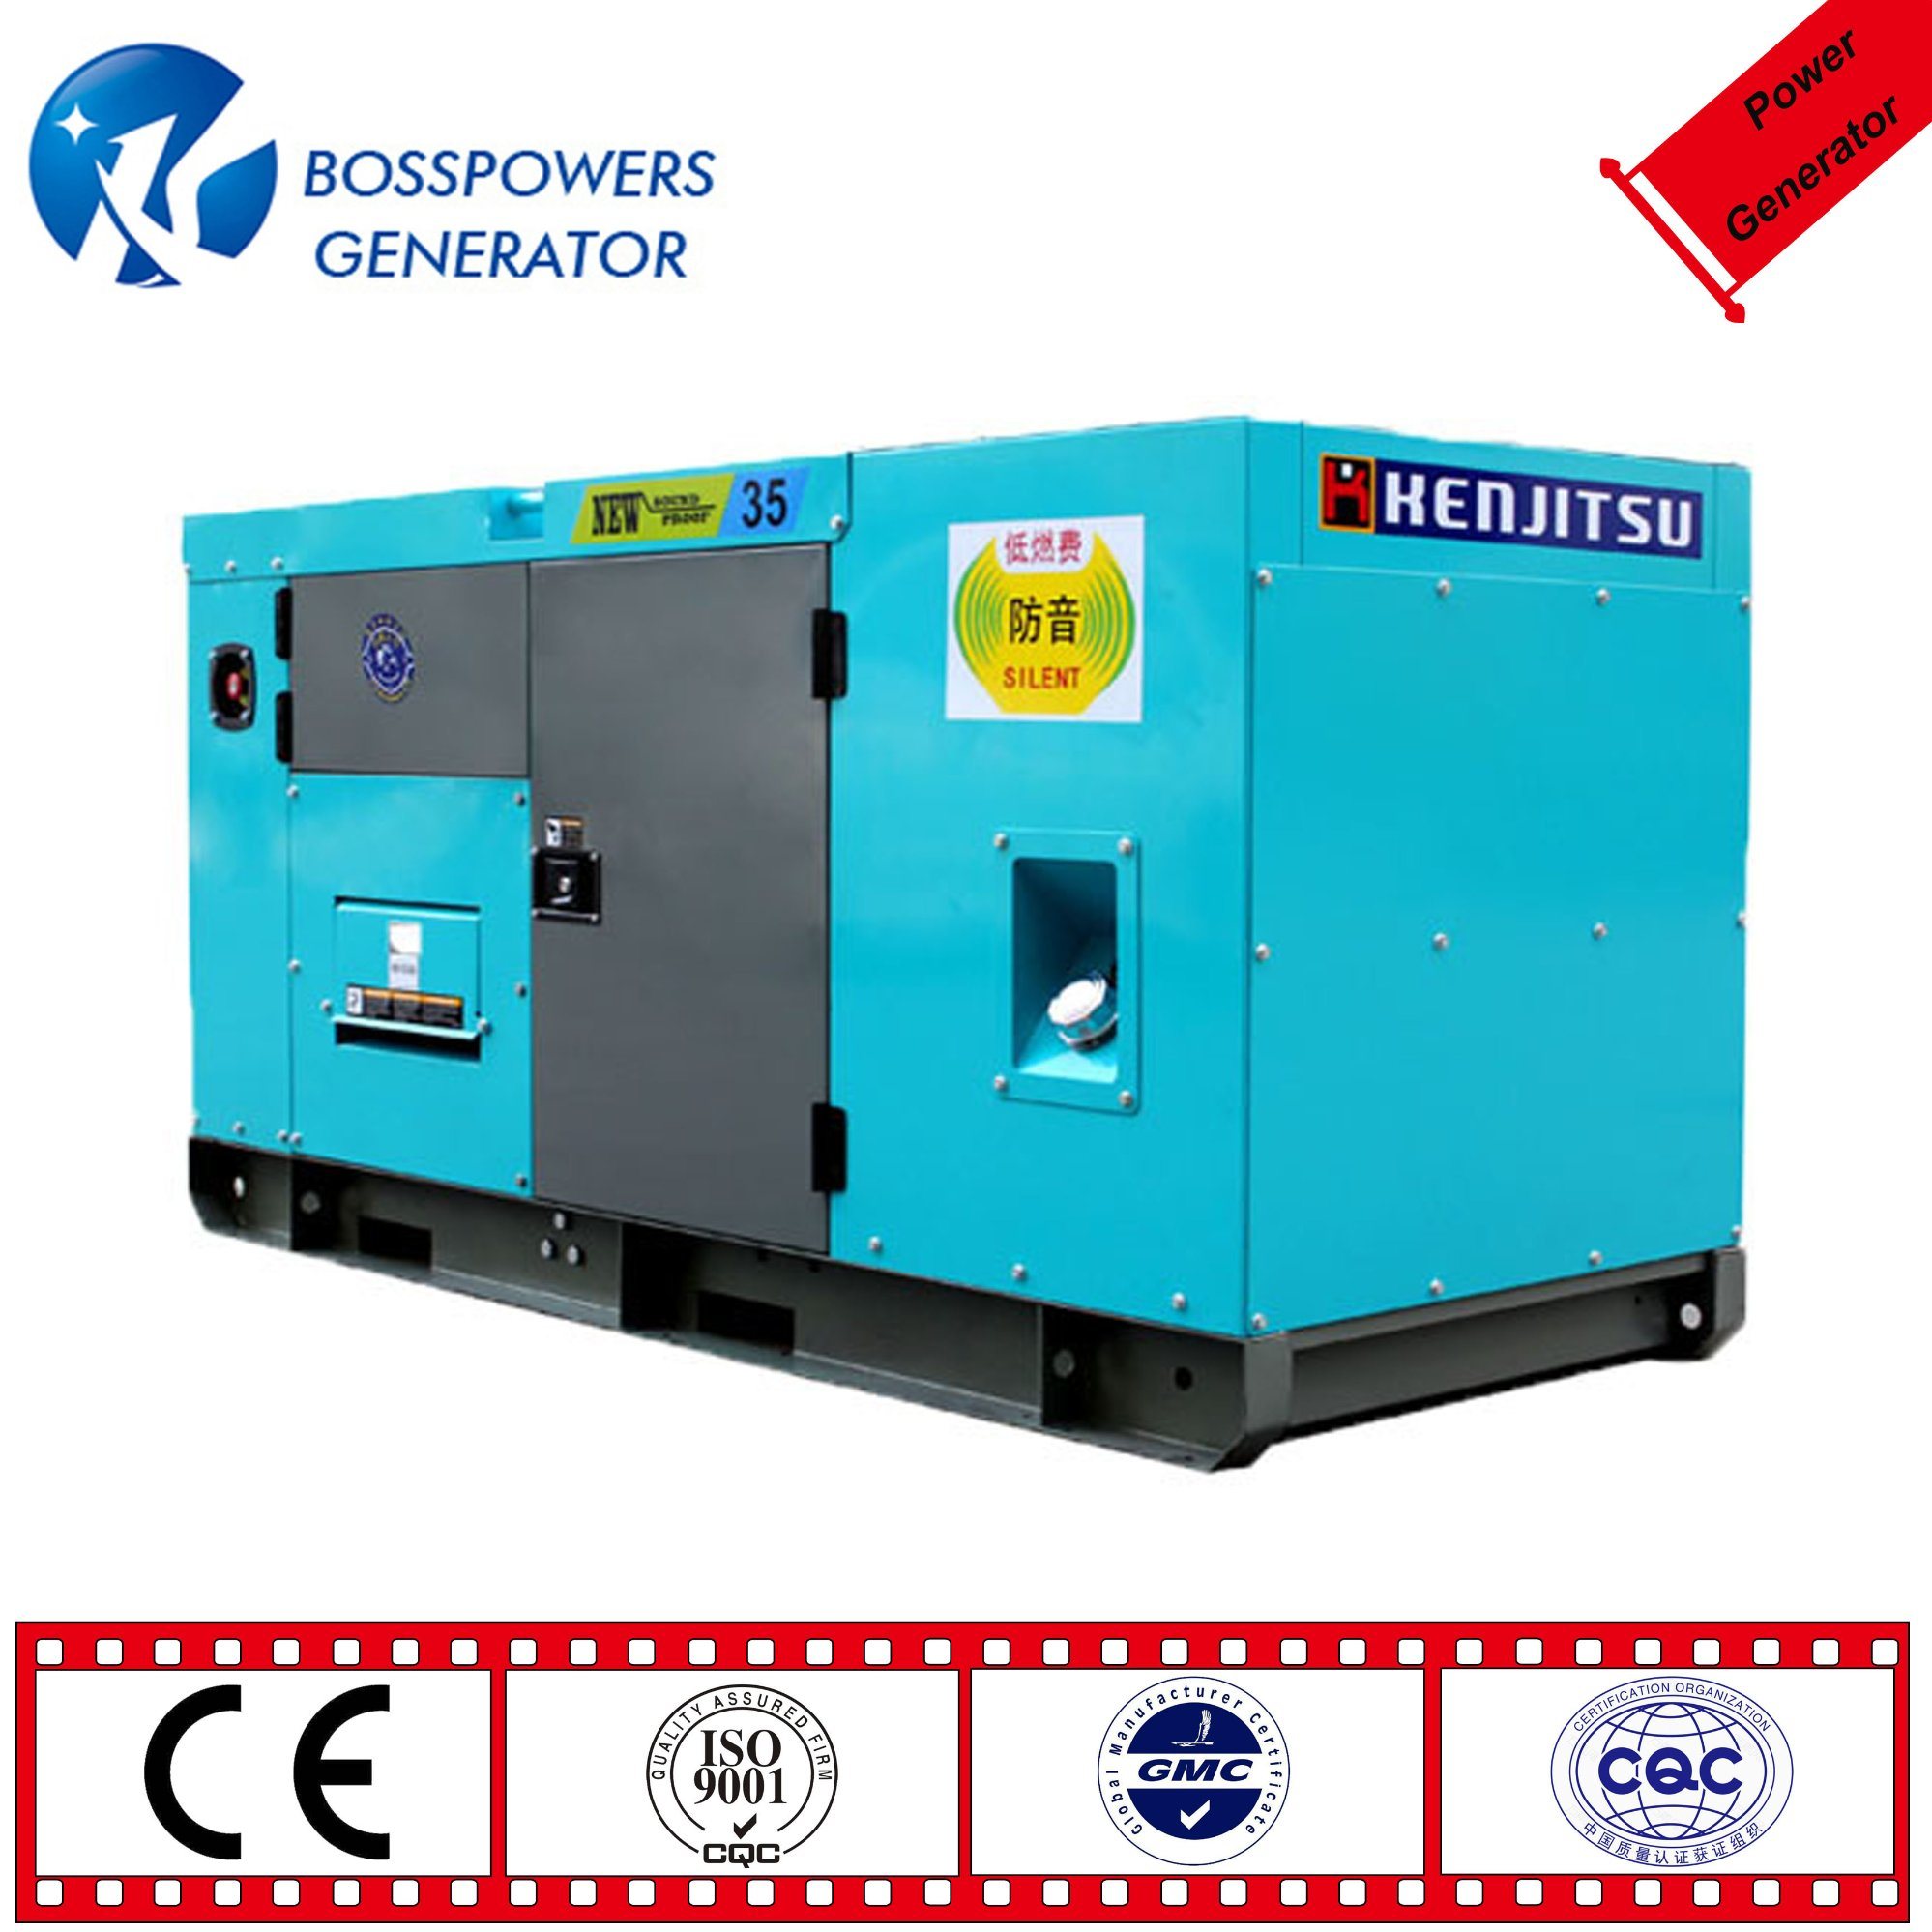 Factory Price 15kw 20kw 30kw 50kw Isuzu Power Generator Diesel Power Generator